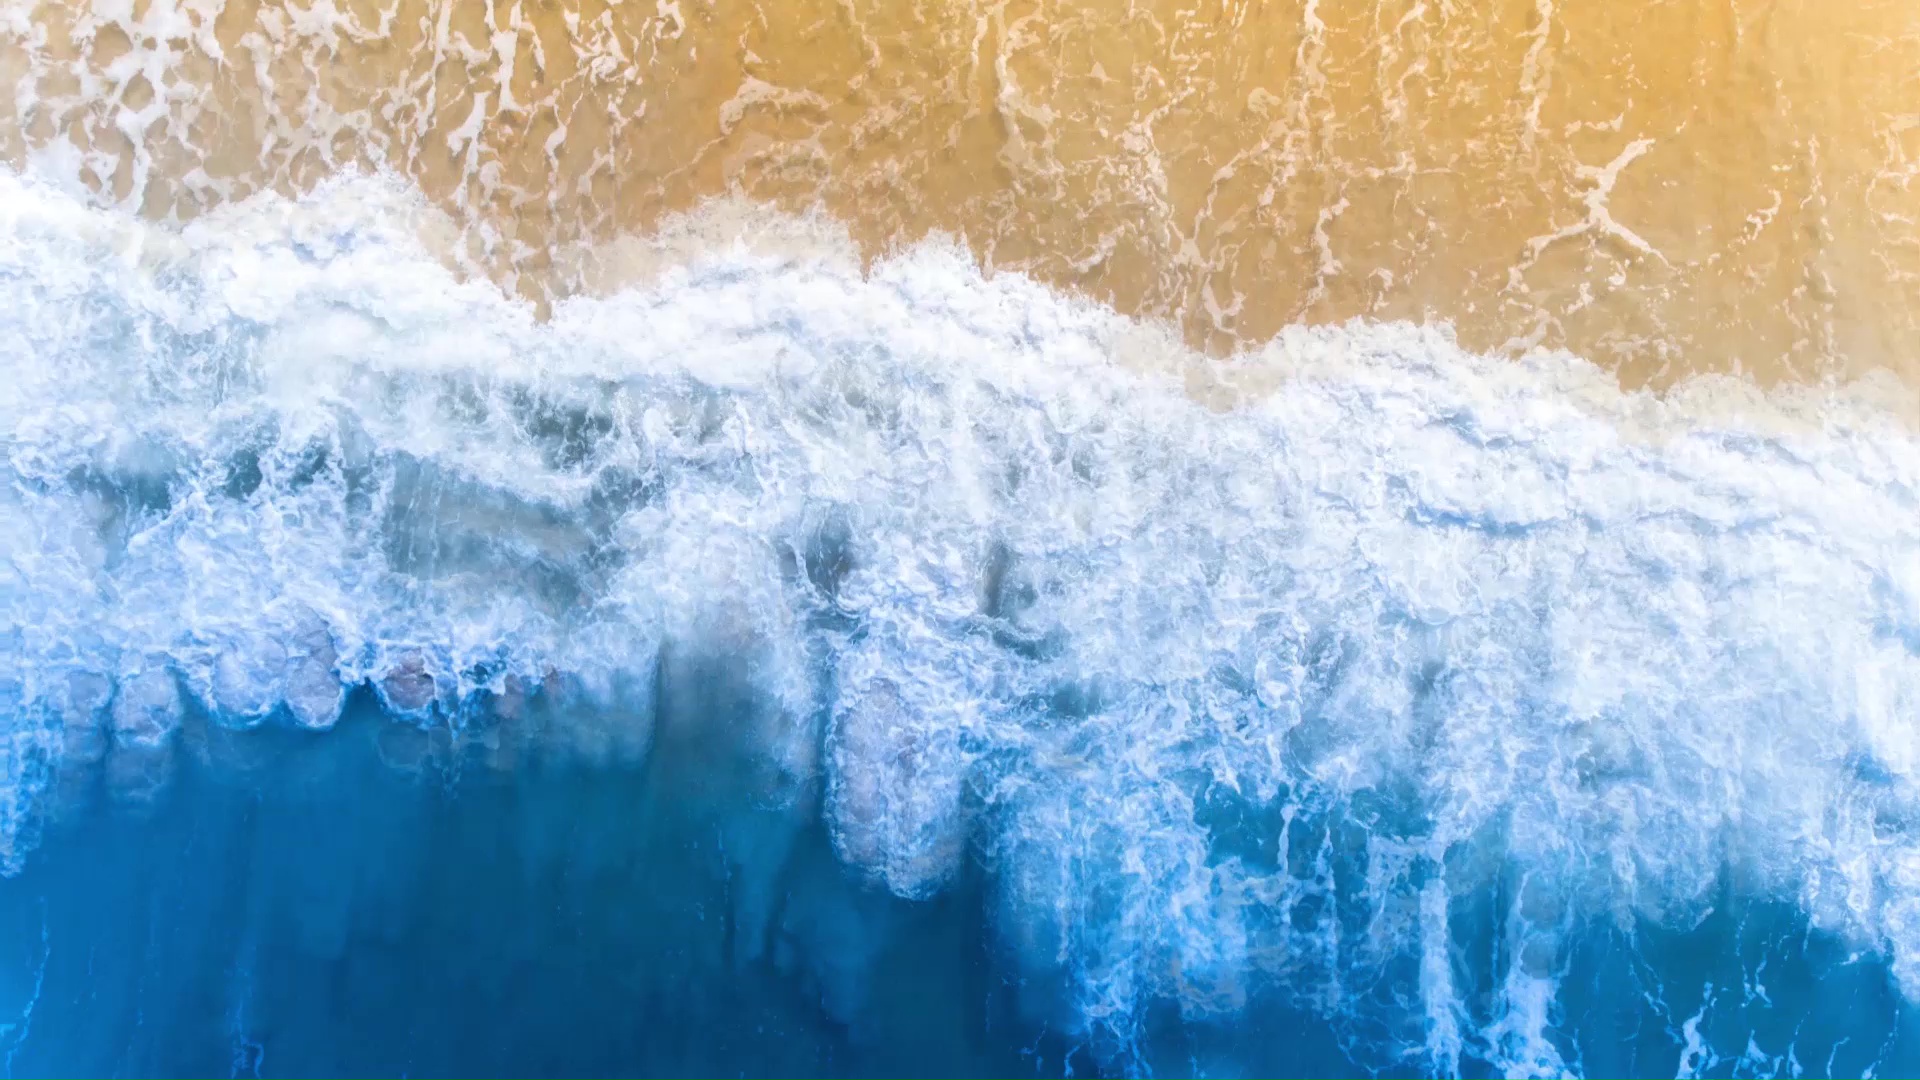 Ocean Waves Live Wallpaper - MoeWalls